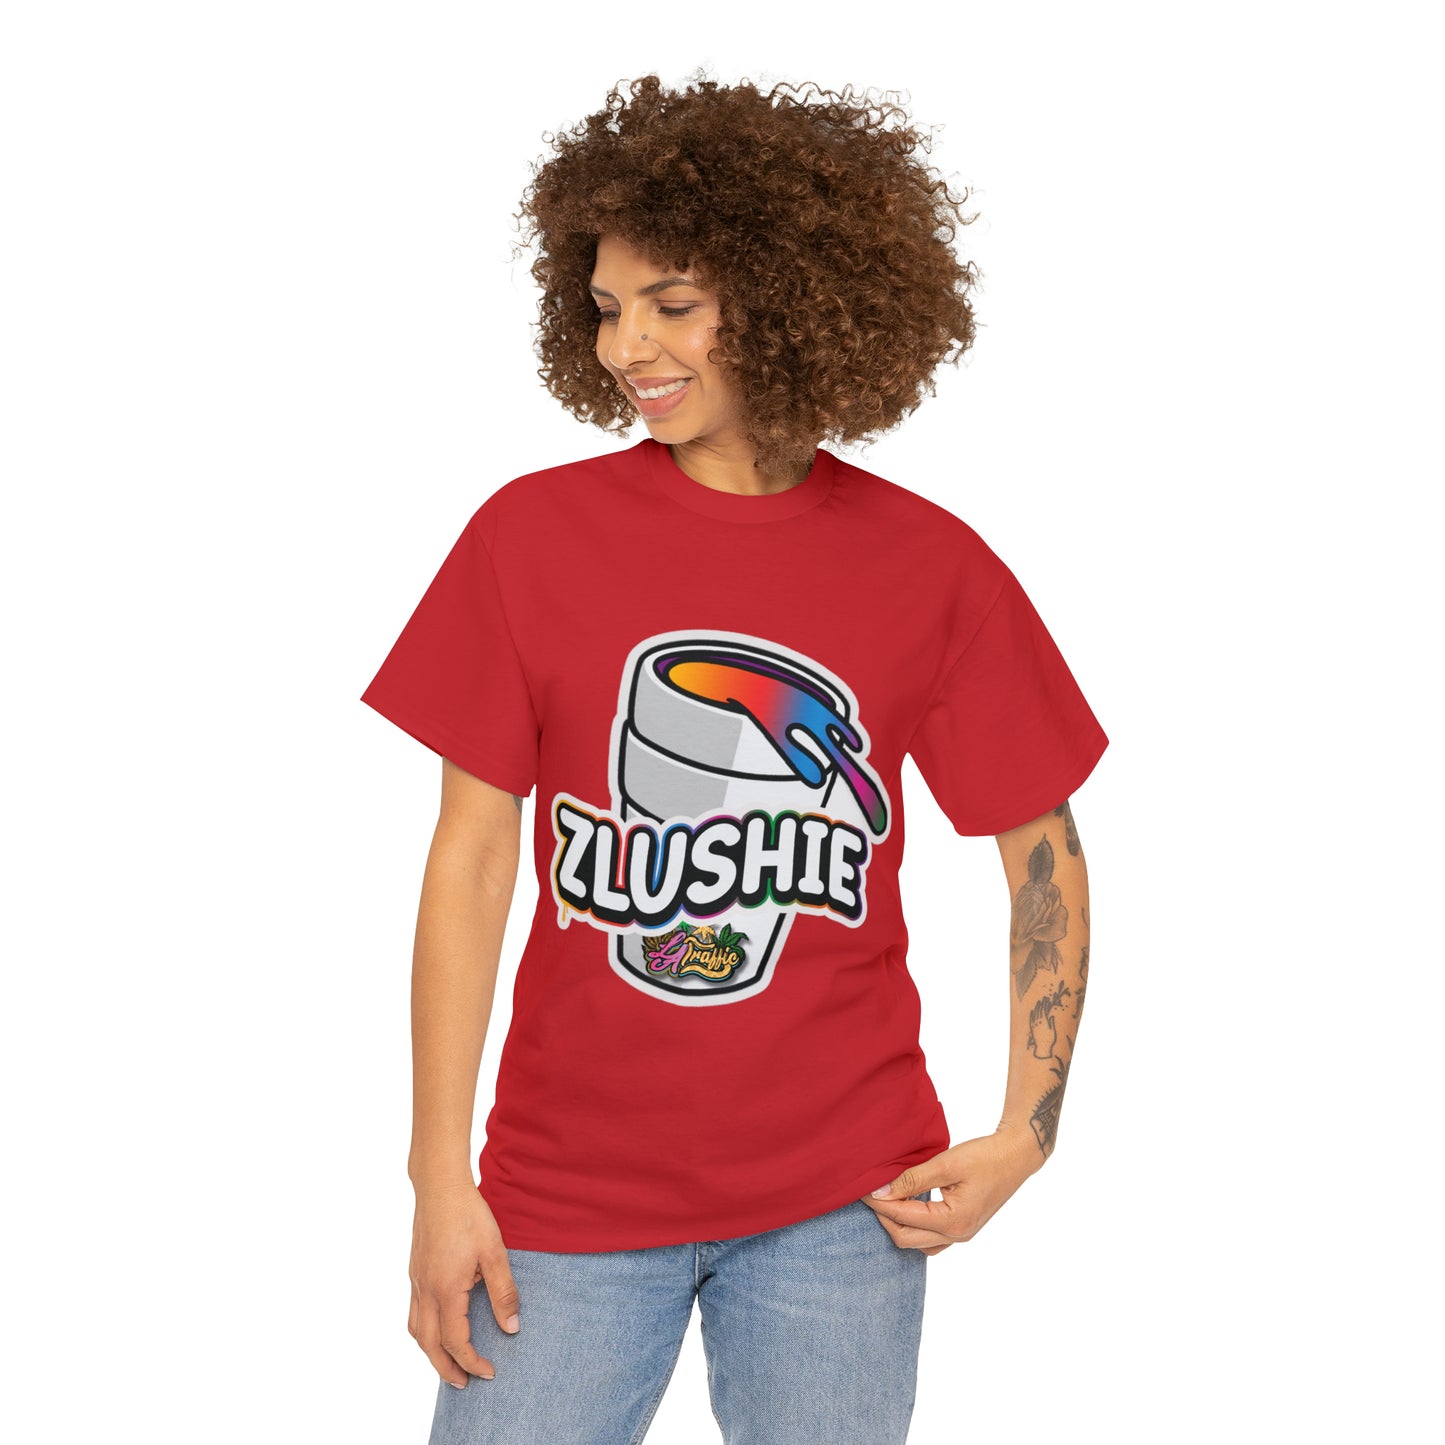 Zlushie Cup T-Shirt